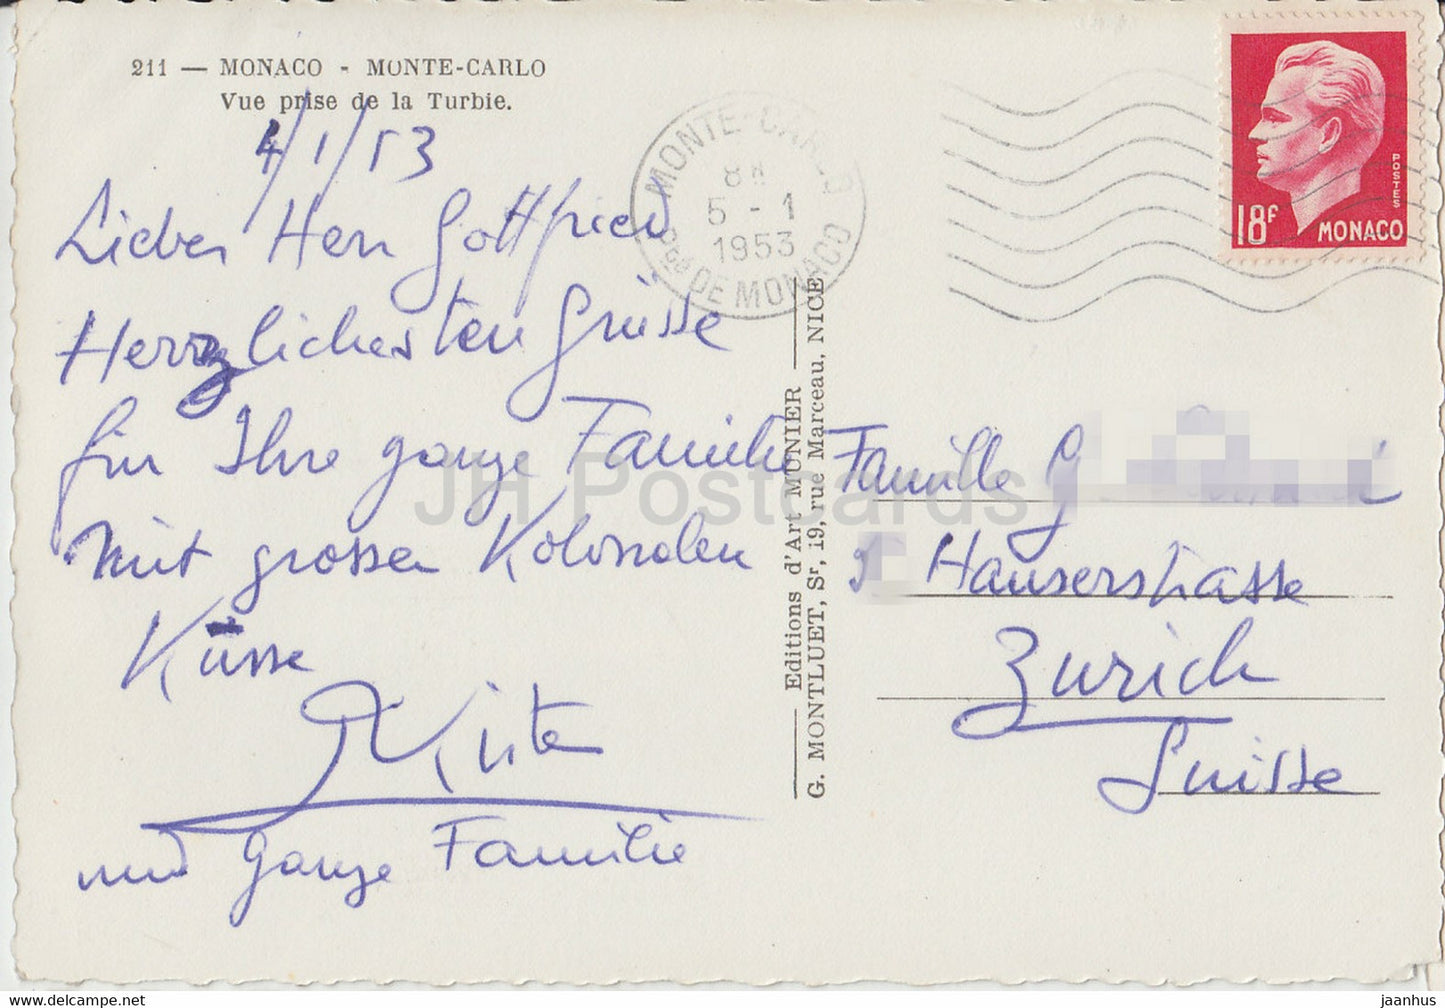 Monte Carlo - Vue prise de la Turbie - 211 - alte Postkarte - 1953 - Monaco - gebraucht